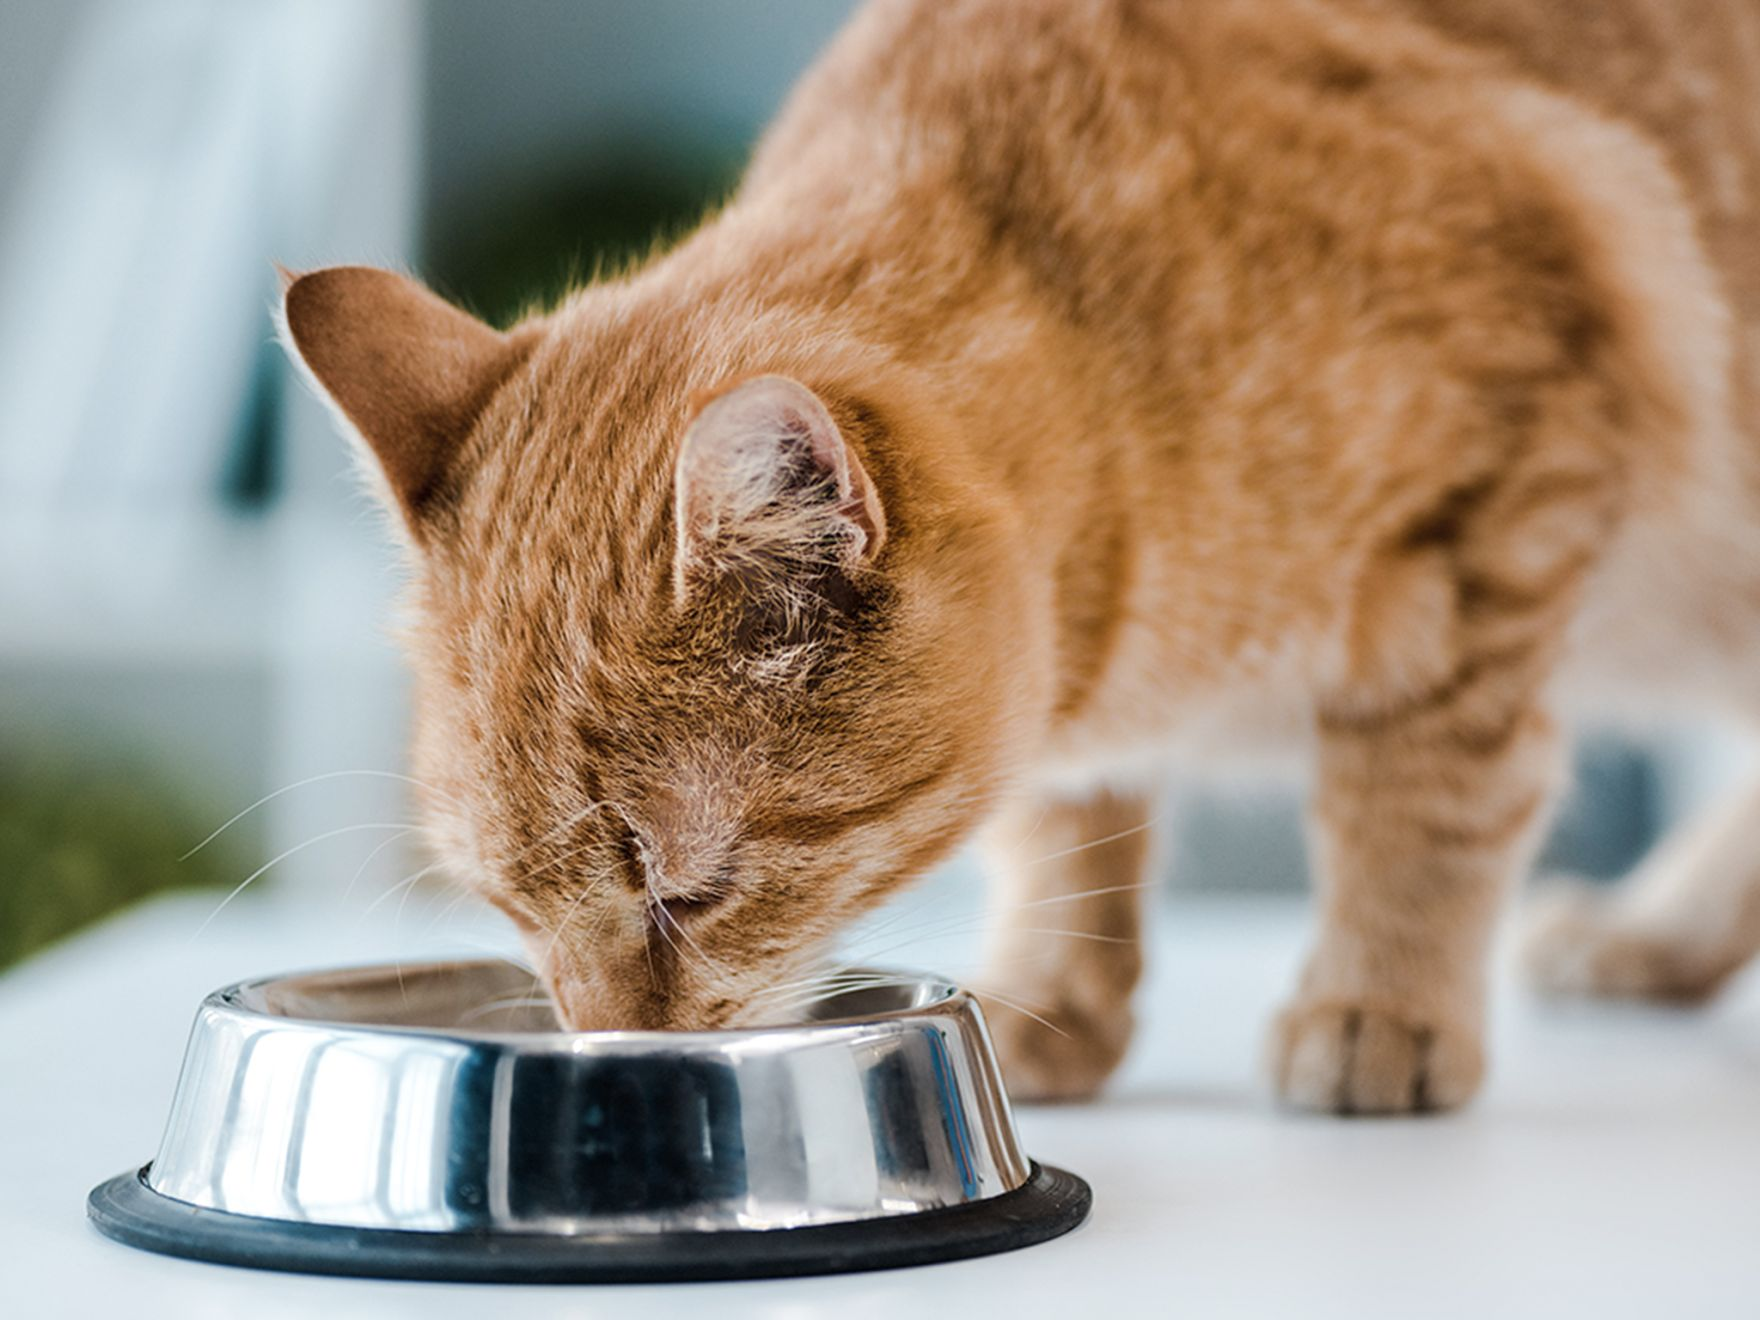 Cat eating from metal bowl